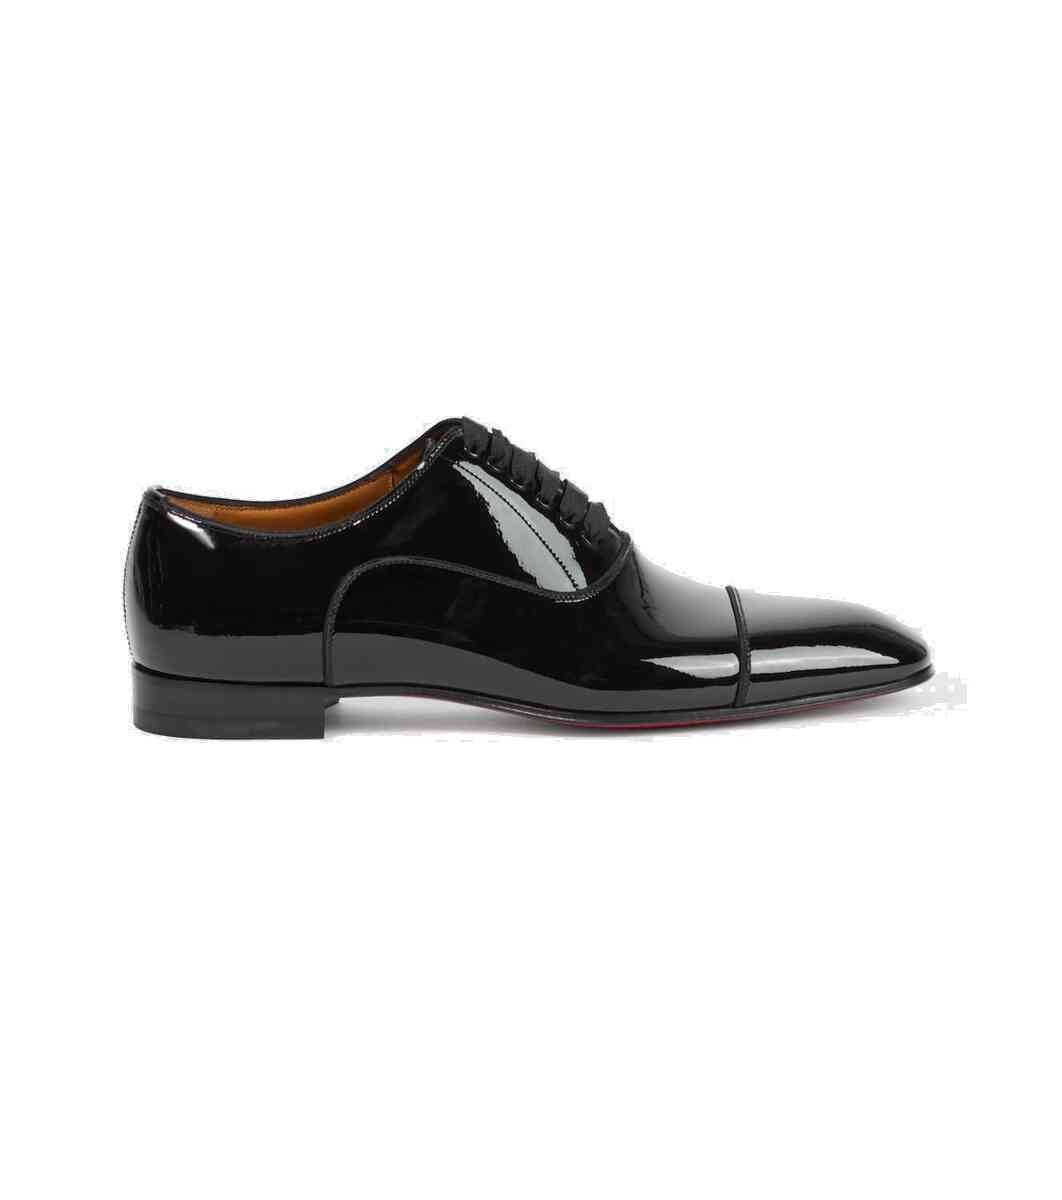 Photo: Christian Louboutin Greggo patent leather Oxford shoes